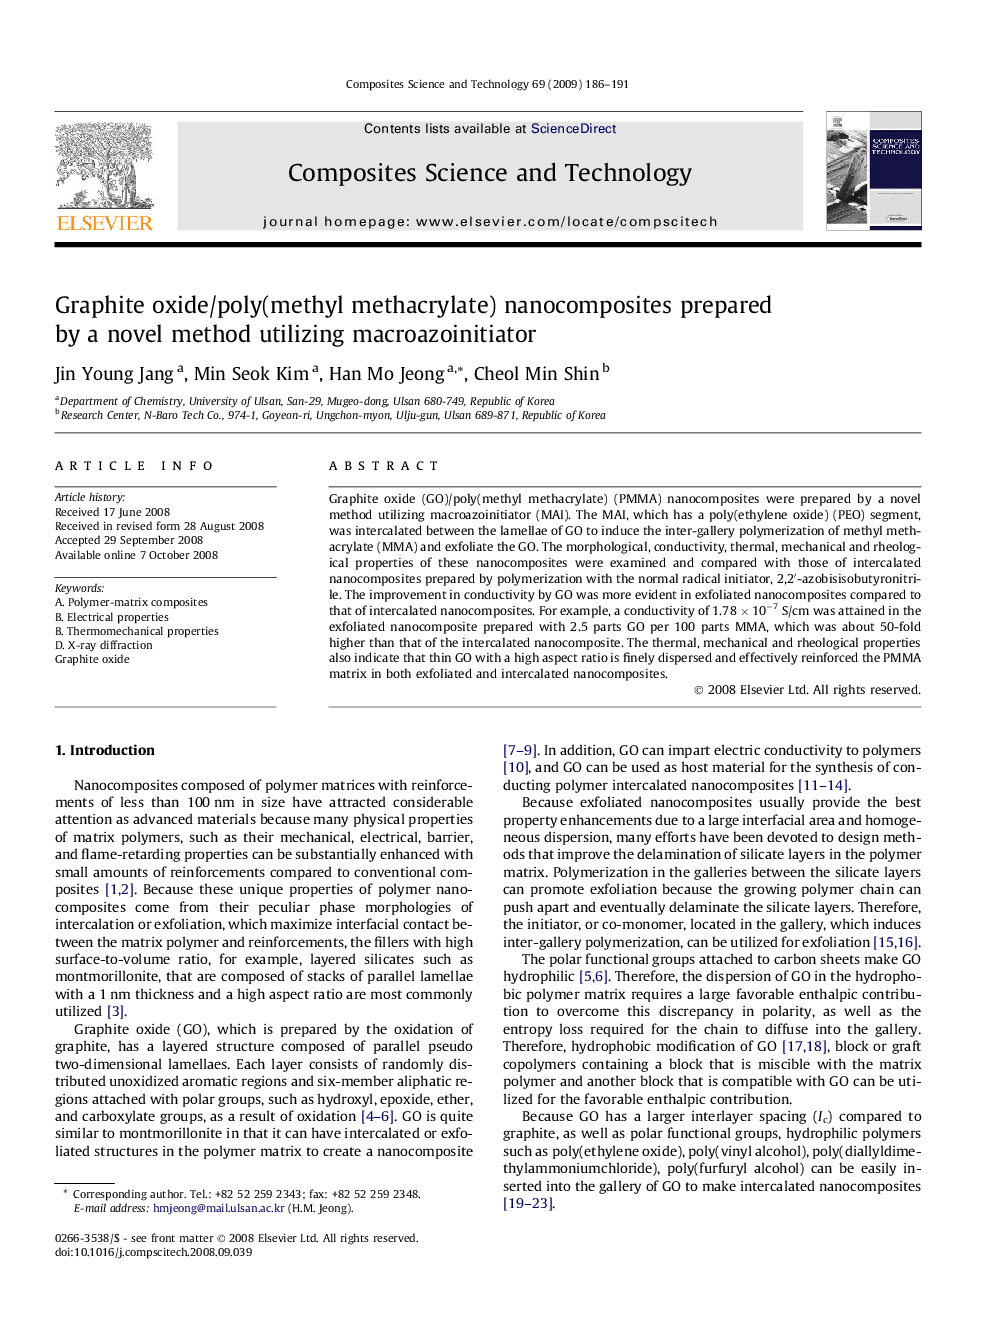 Graphite oxide/poly(methyl methacrylate) nanocomposites prepared by a novel method utilizing macroazoinitiator